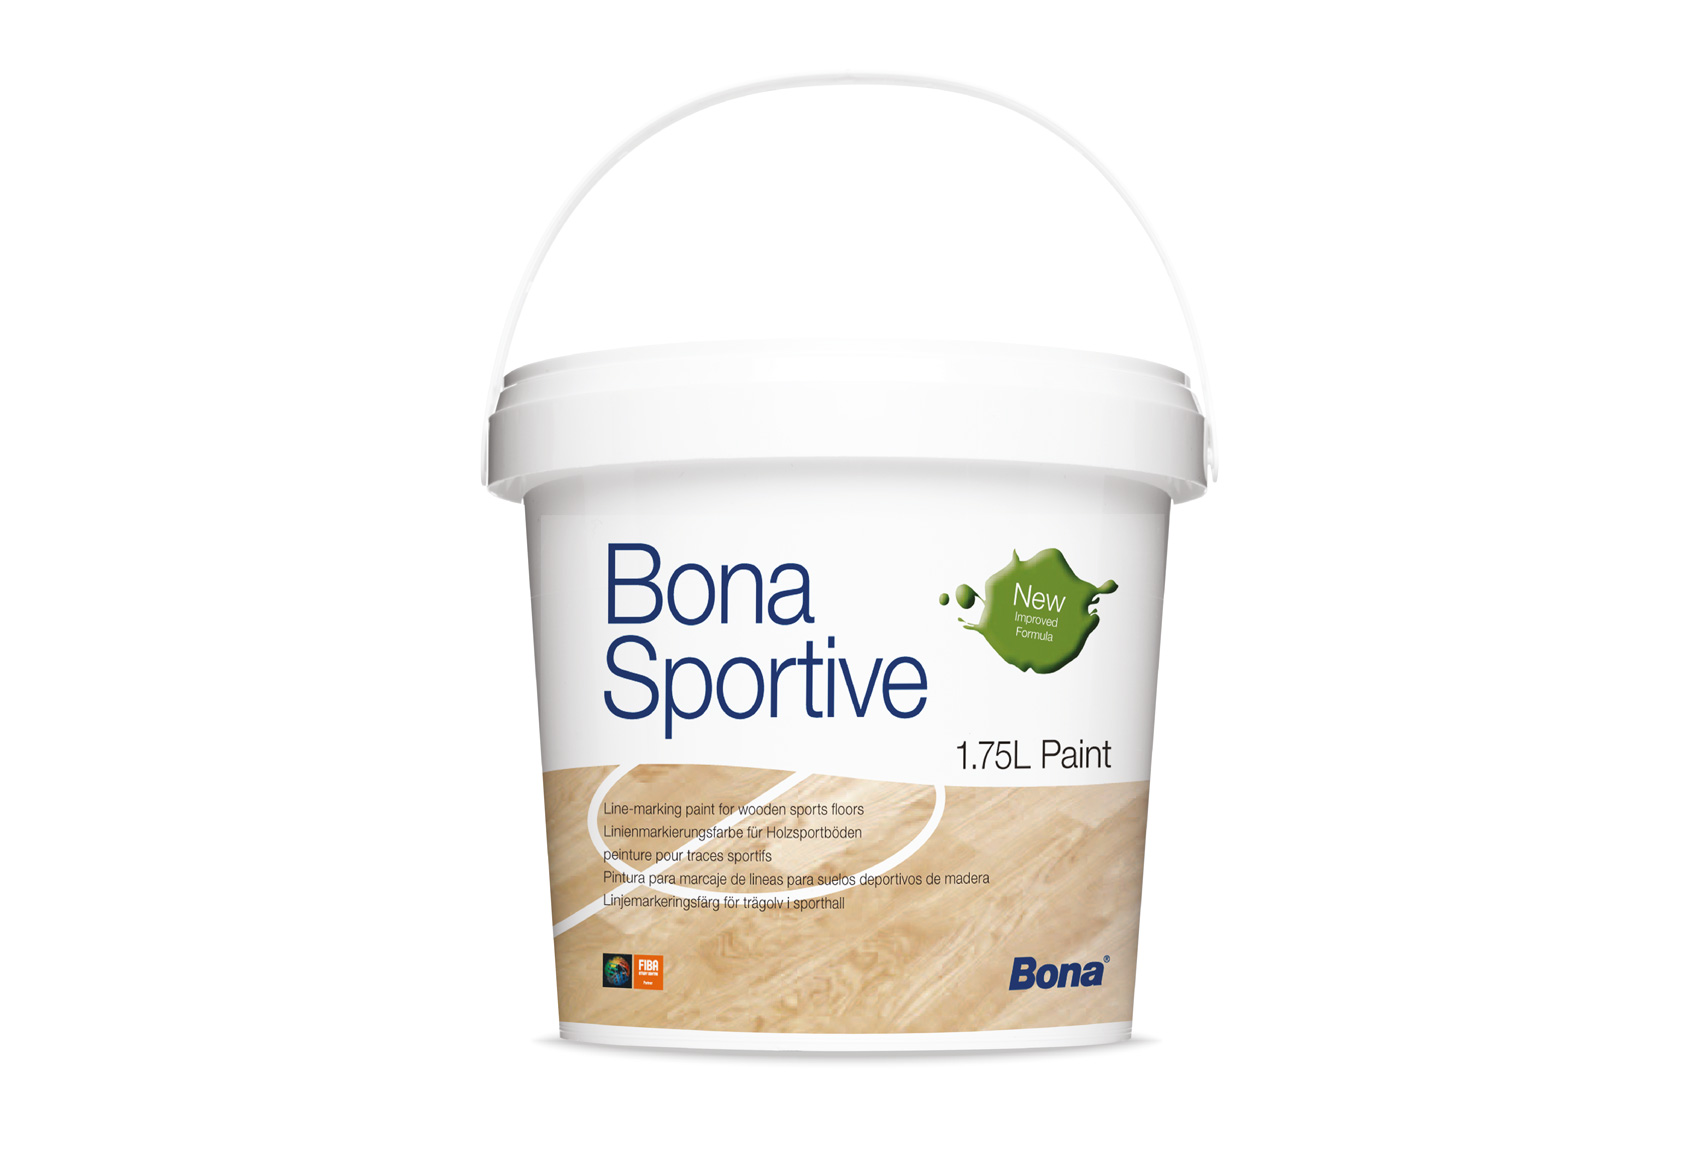 Bona Sportive Line Marking Paint